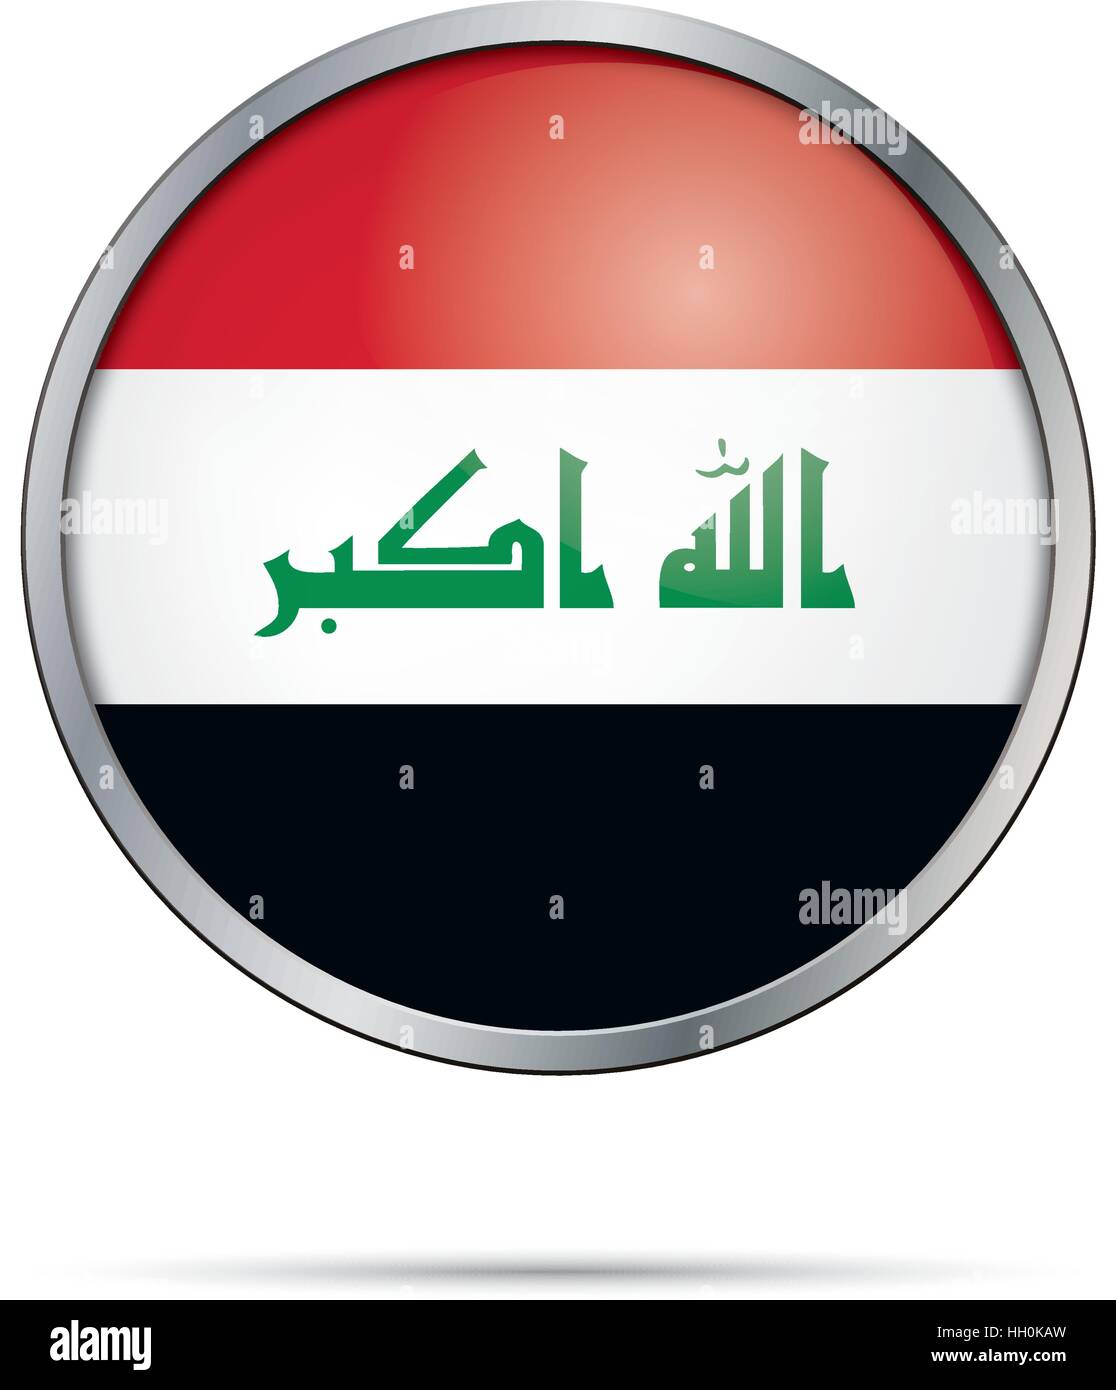 https://c8.alamy.com/compde/hh0kaw/vektor-irakische-flagge-button-irak-flagge-in-glas-knopf-stil-mit-metallrahmen-hh0kaw.jpg